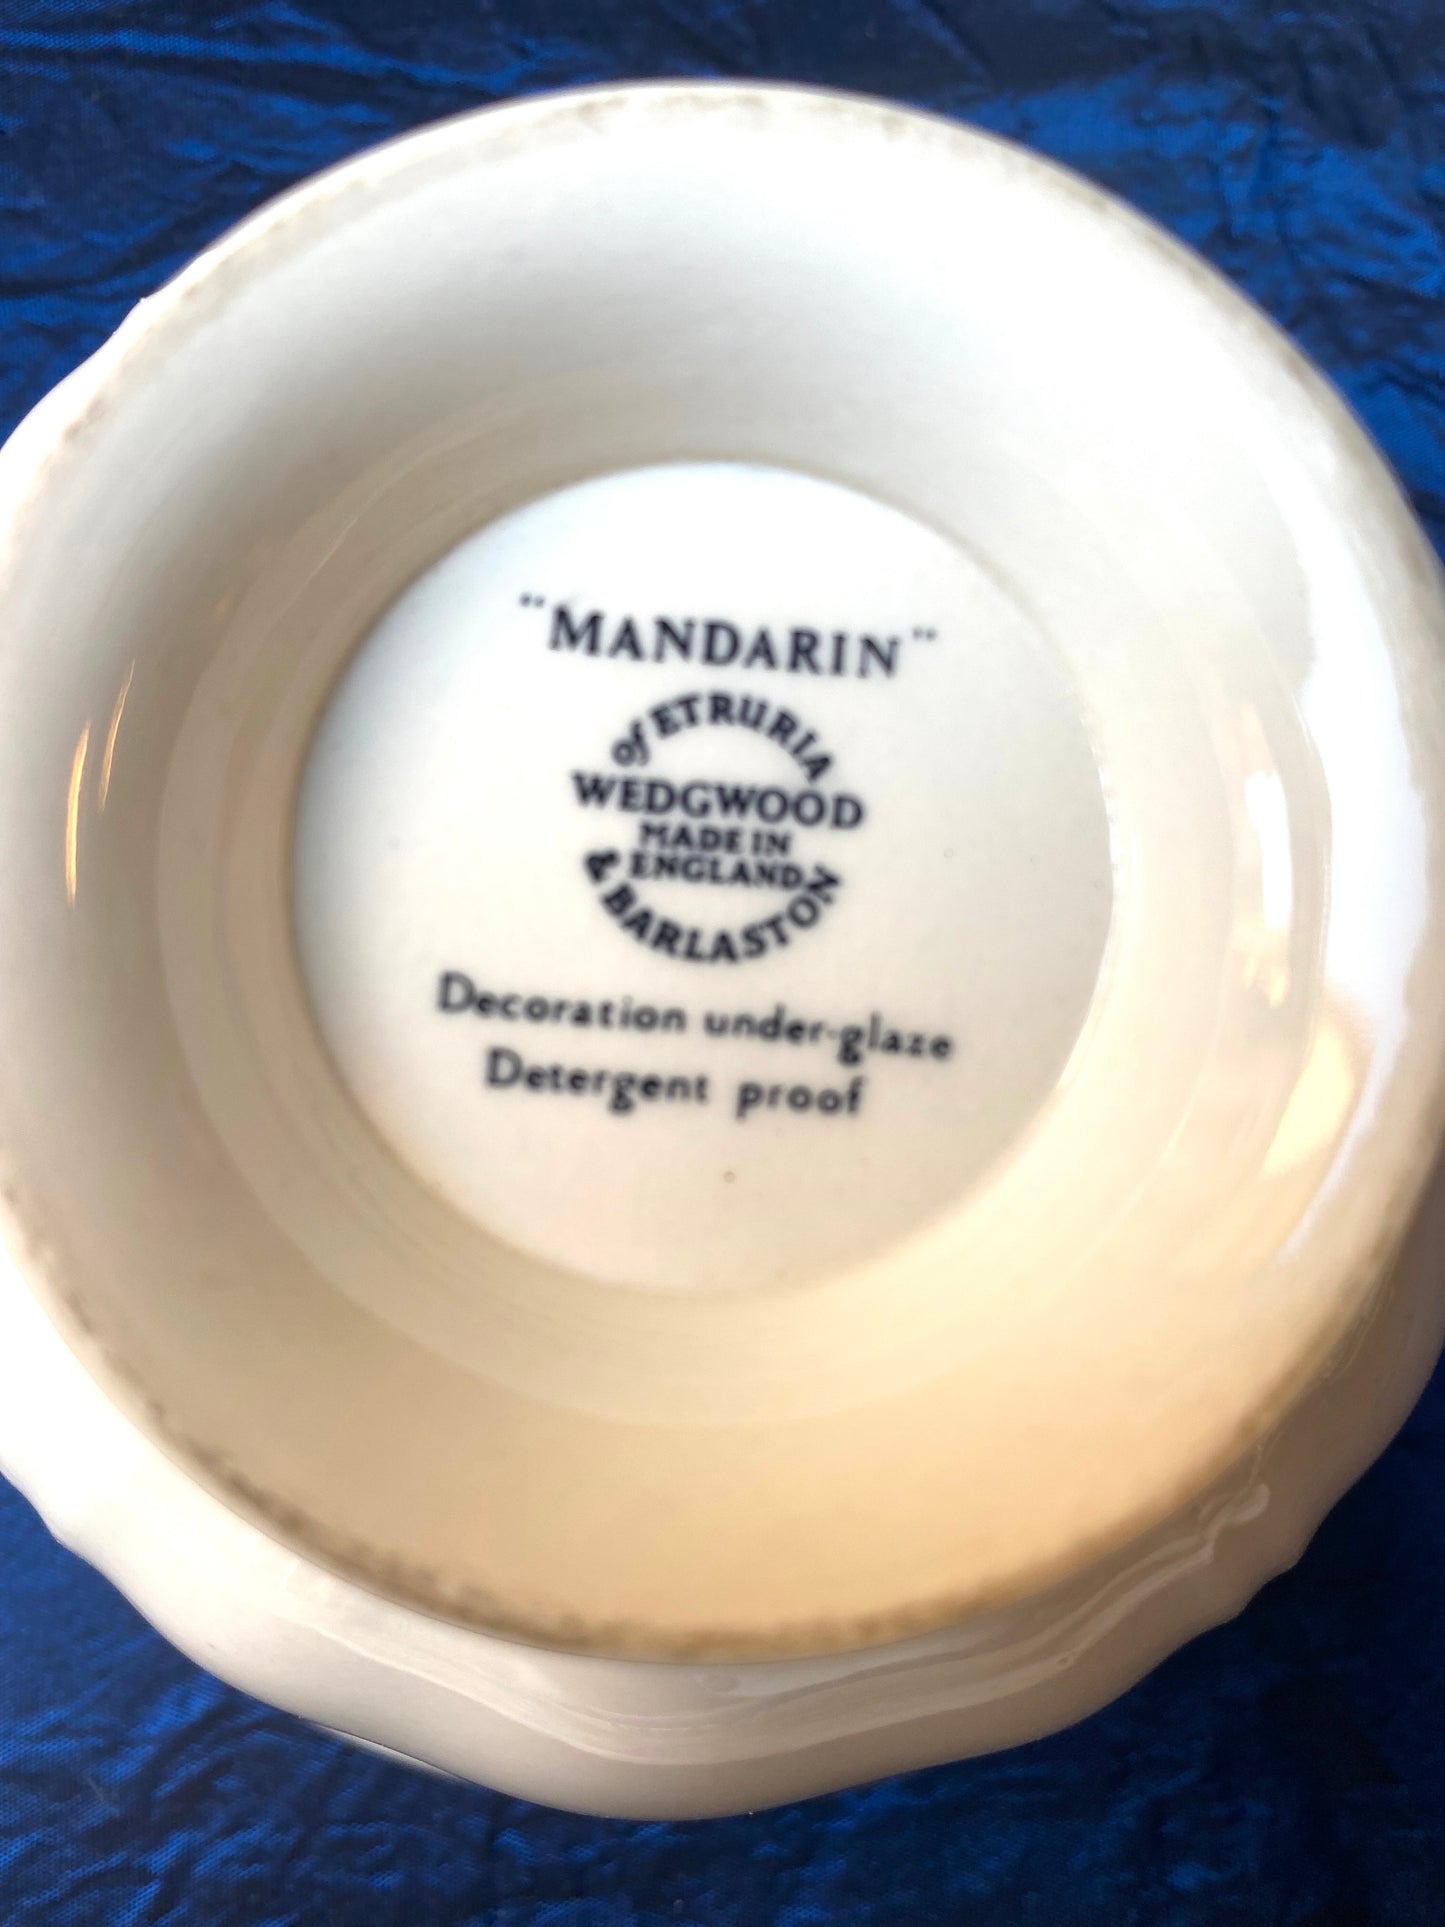 Wedgwood “Mandarin” bouillon cup